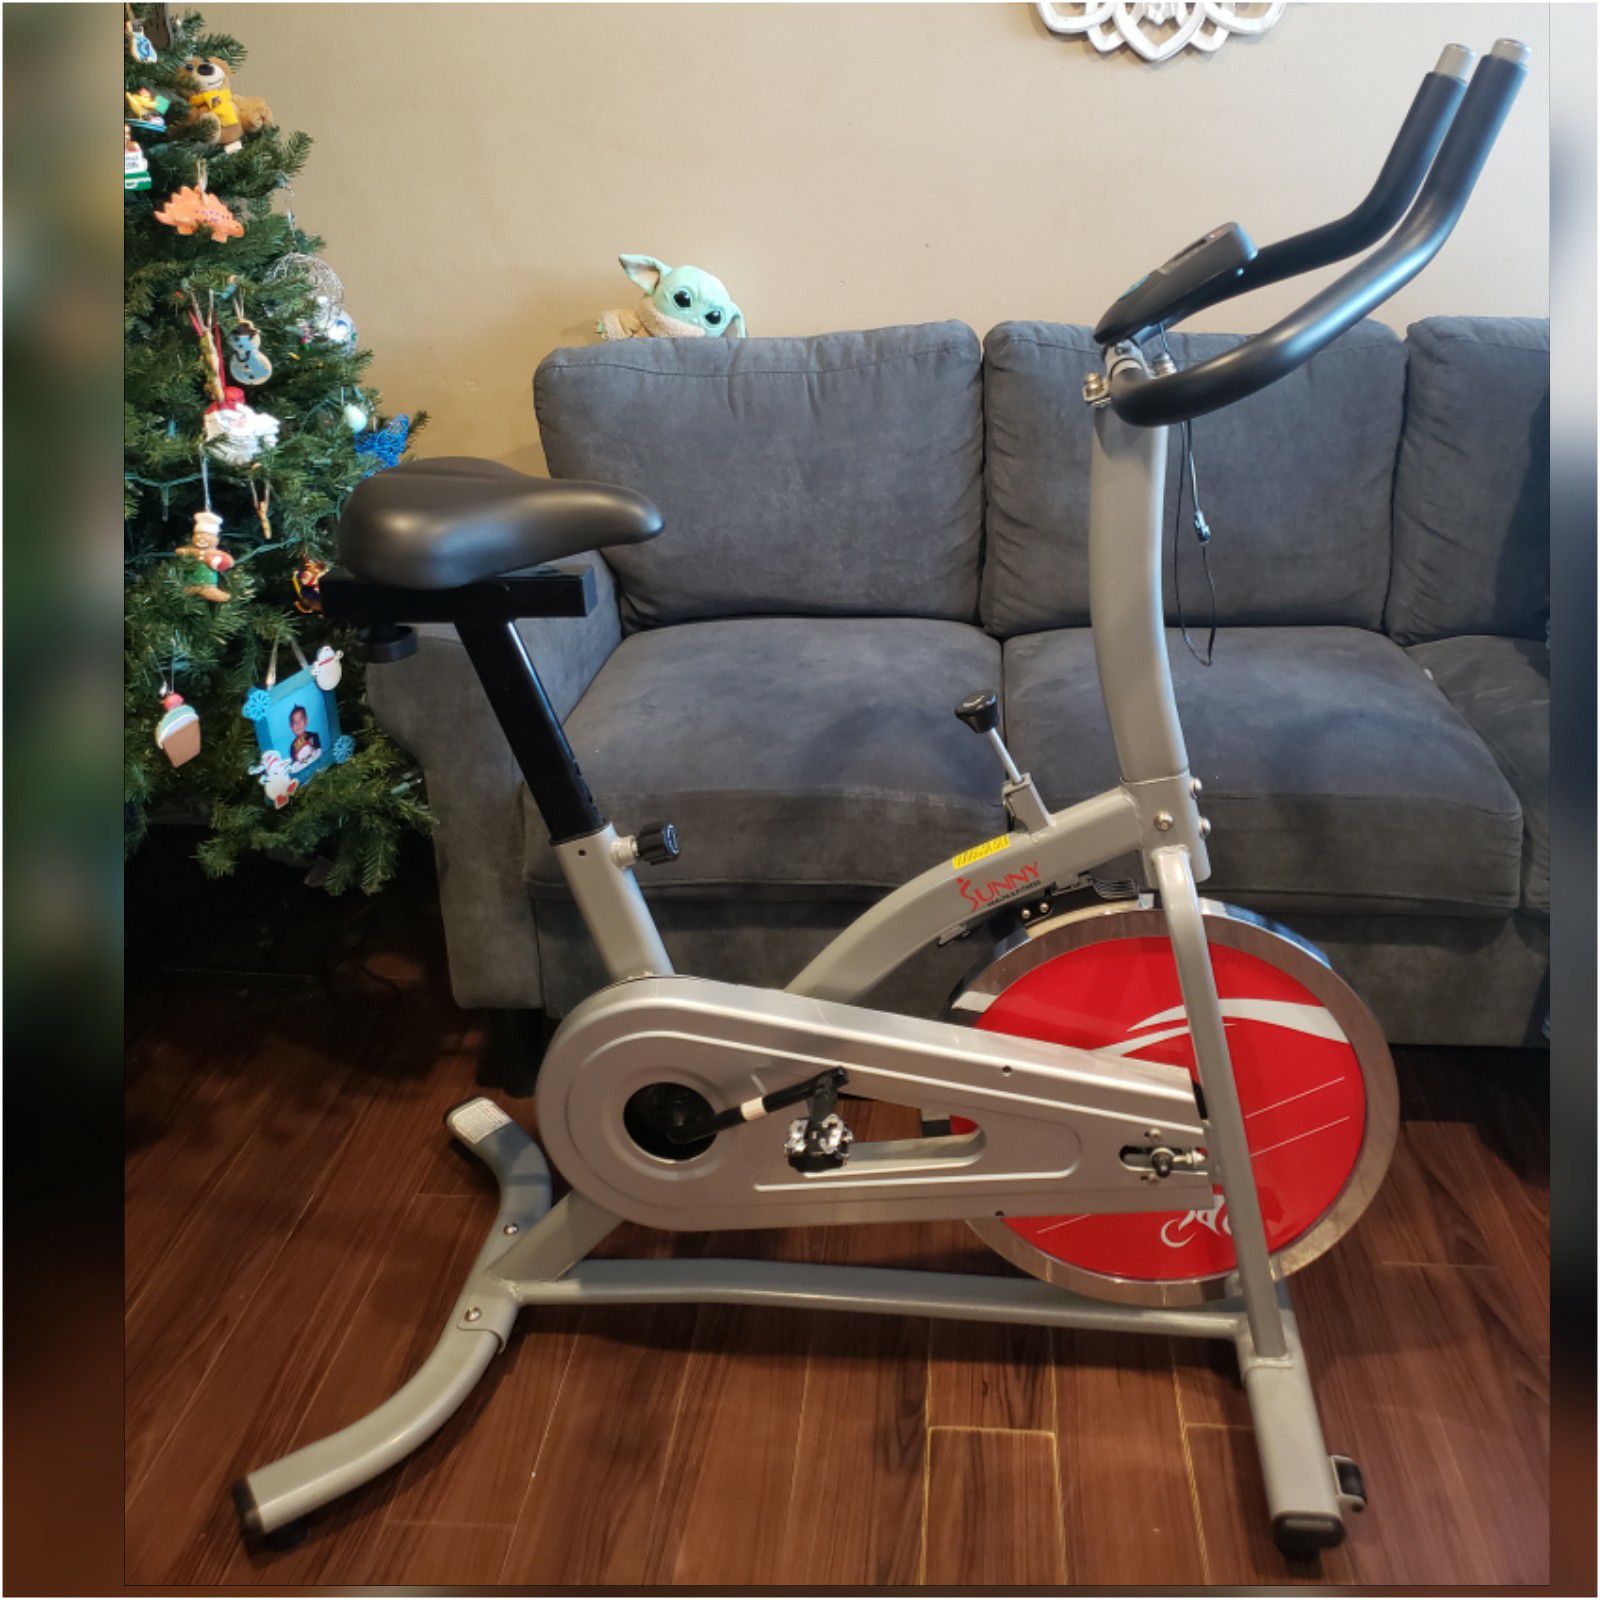 Spin Bike - Sunny Health & Fitness Indoor Exercise Stationary Bike with Digital Monitor, 22 LB Chromed Flywheel